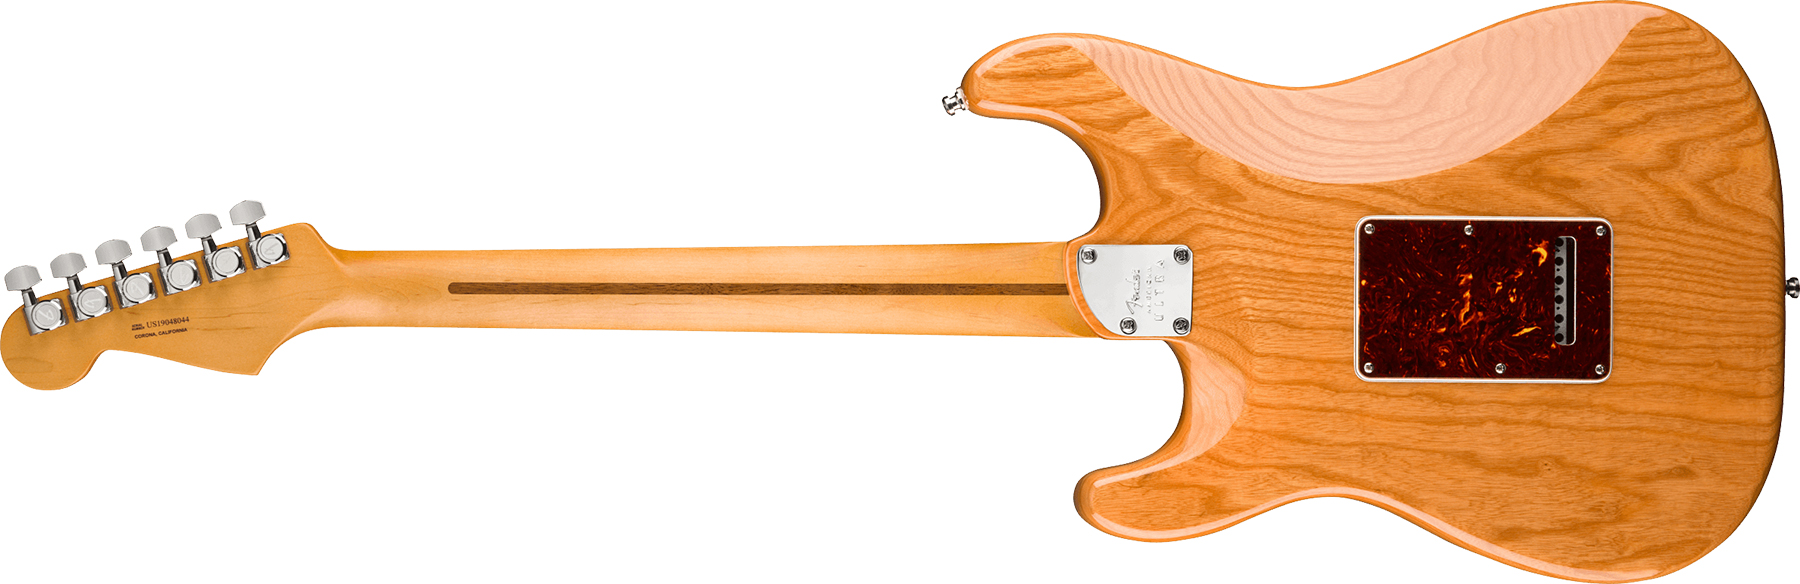 Fender Strat American Ultra Hss 2019 Usa Rw - Aged Natural - Str shape electric guitar - Variation 1